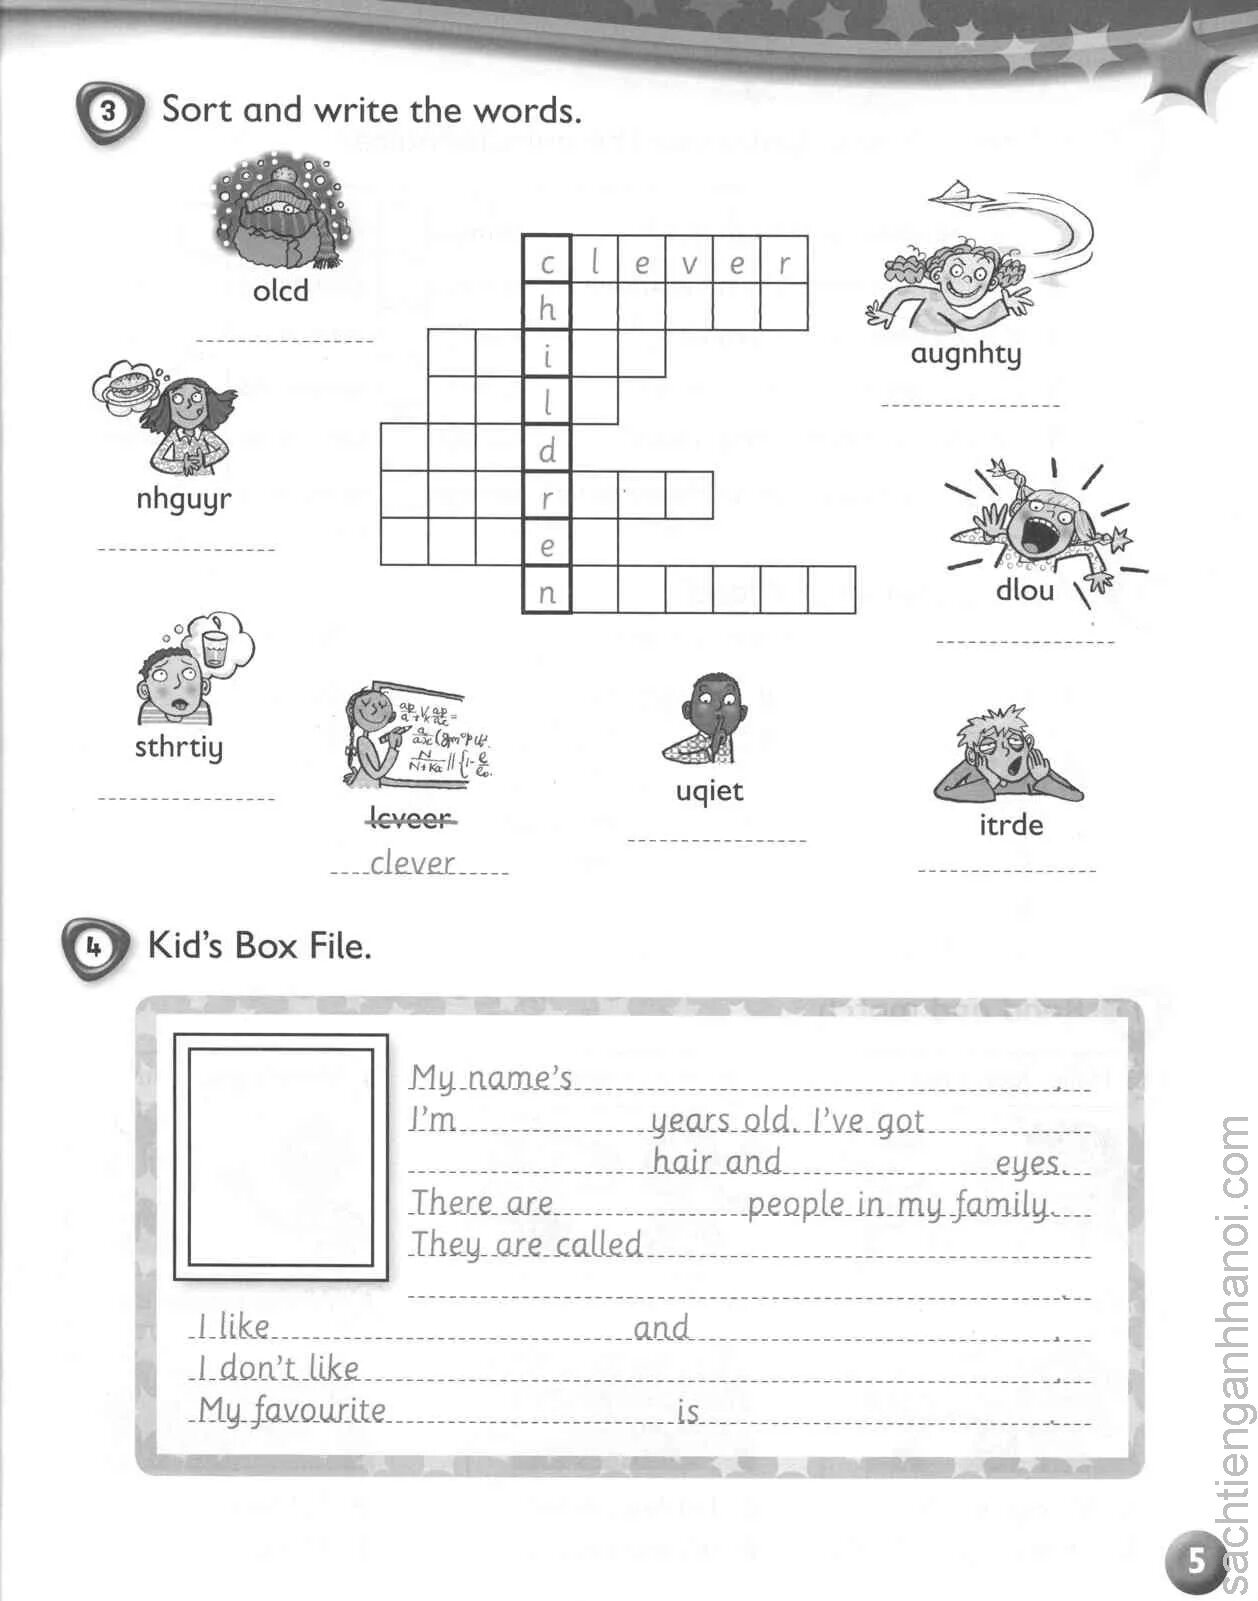 Kids box 4 unit 4 wordwall. КИД бокс 2 рабочая тетрадь. Kids Box 2 activity book ответы. Kids Box 4 activity book ответы рабочая тетрадь. Kids Box 4 activity book ответы.